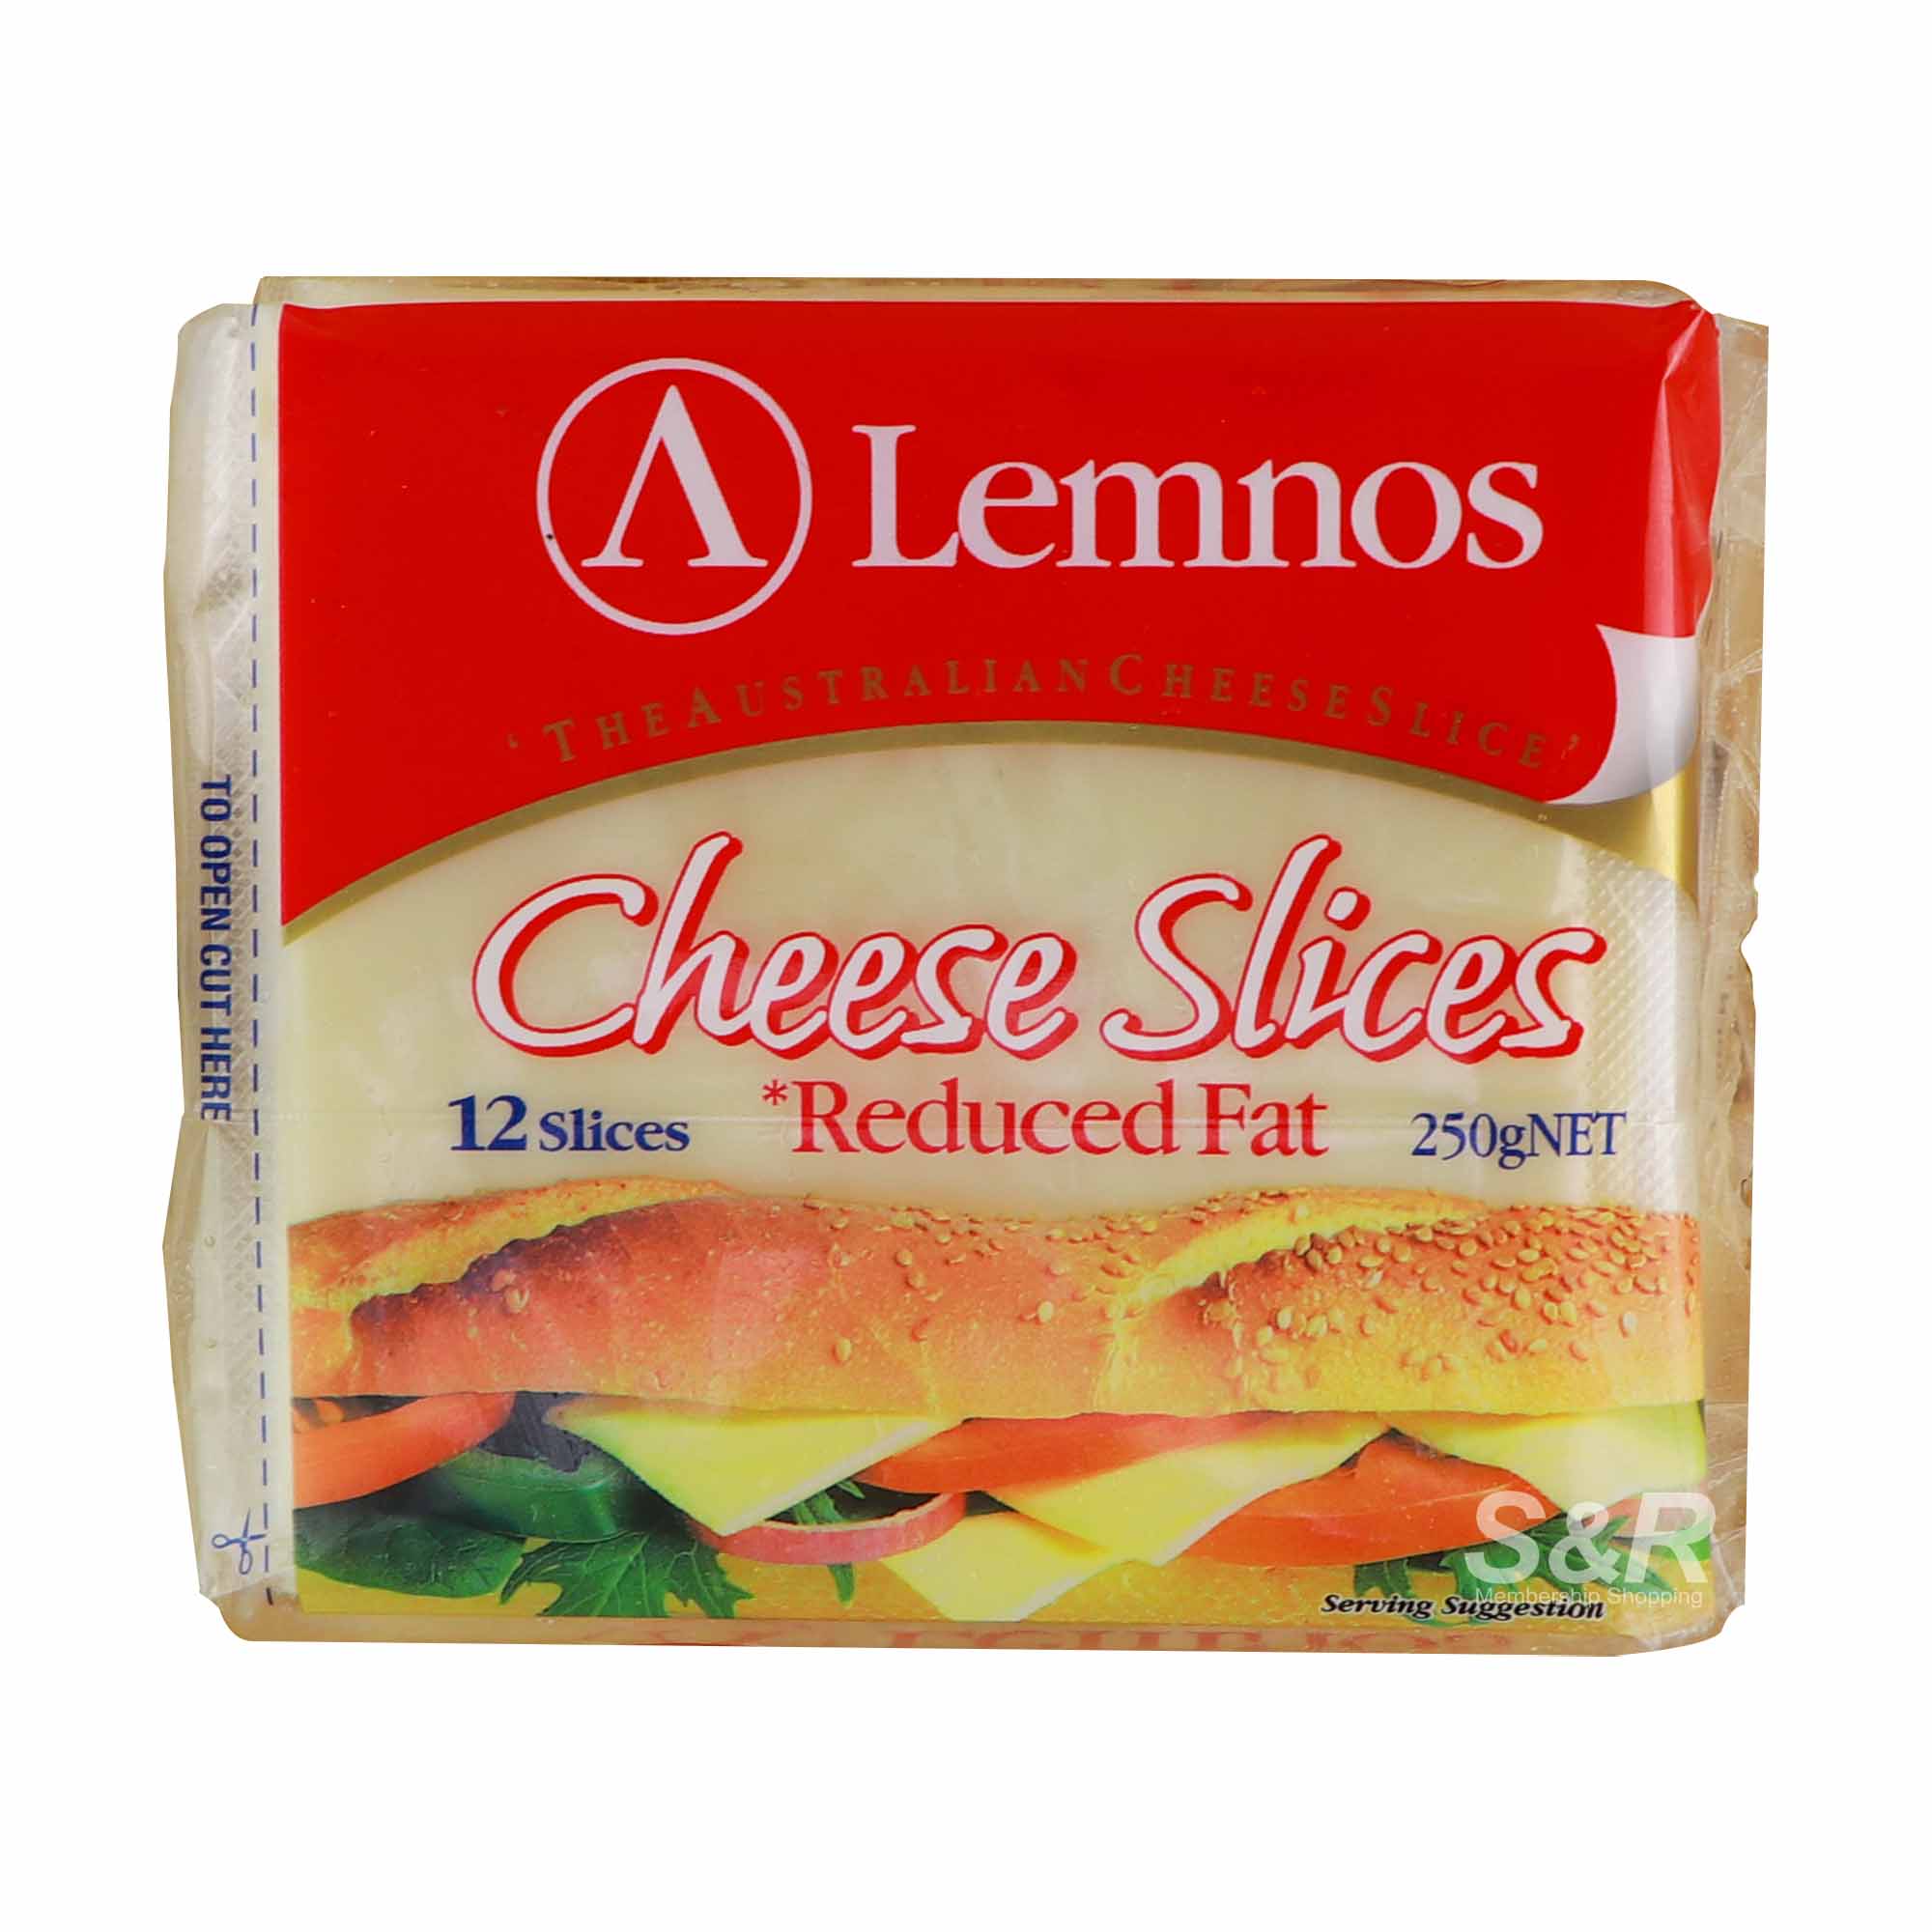 Lemnos Cheese Slices 12pcs